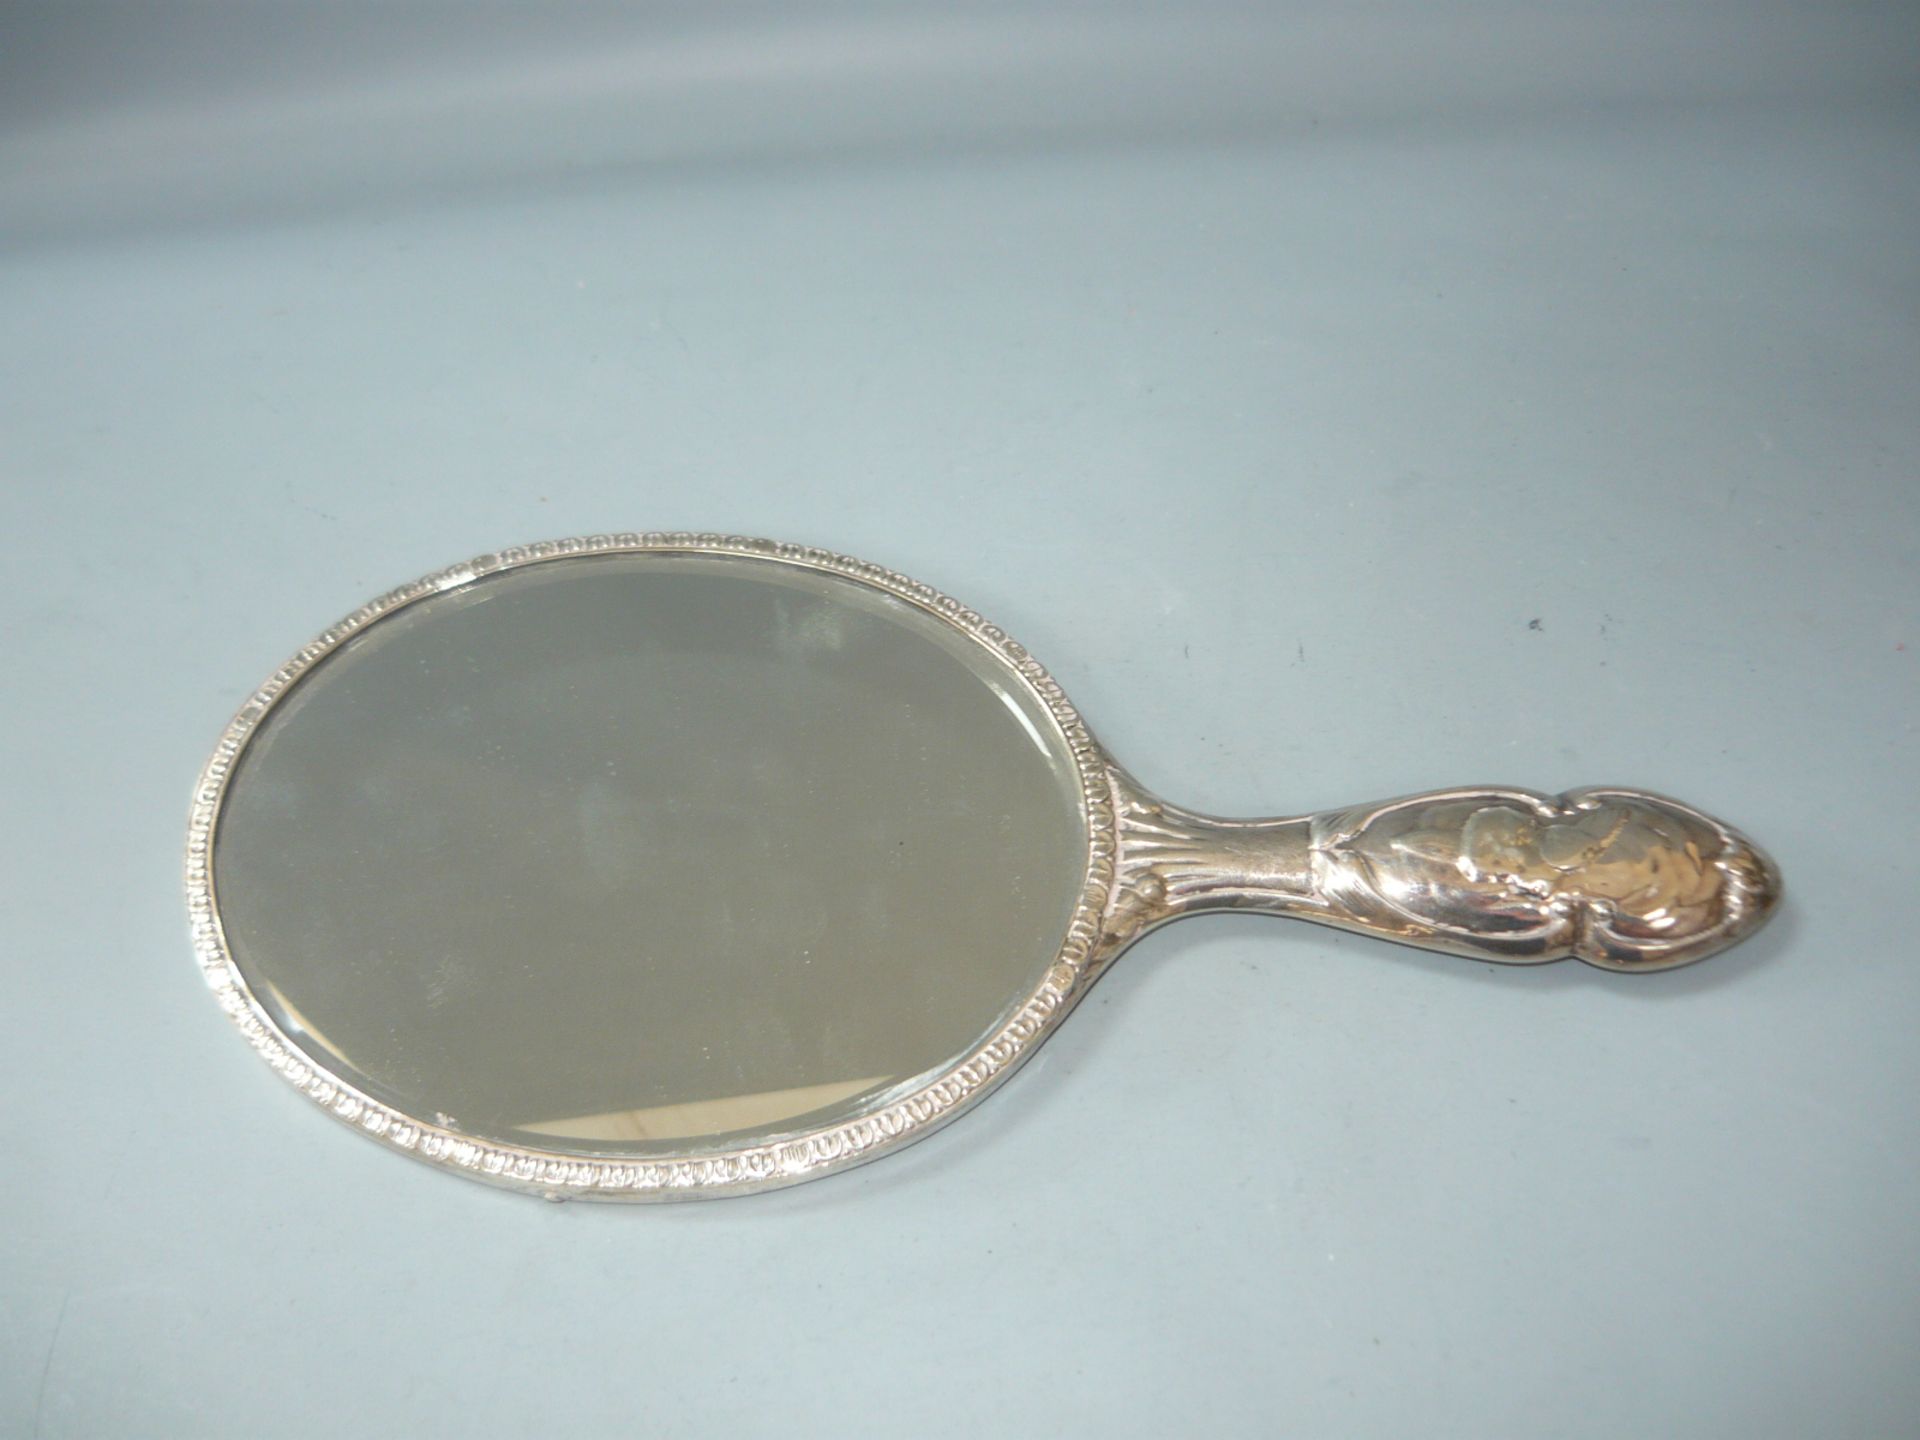 Großer Handspiegel in 925 Sterling Silber. London, England. H. 28cm. English: Huge hand mirror. - Image 2 of 2